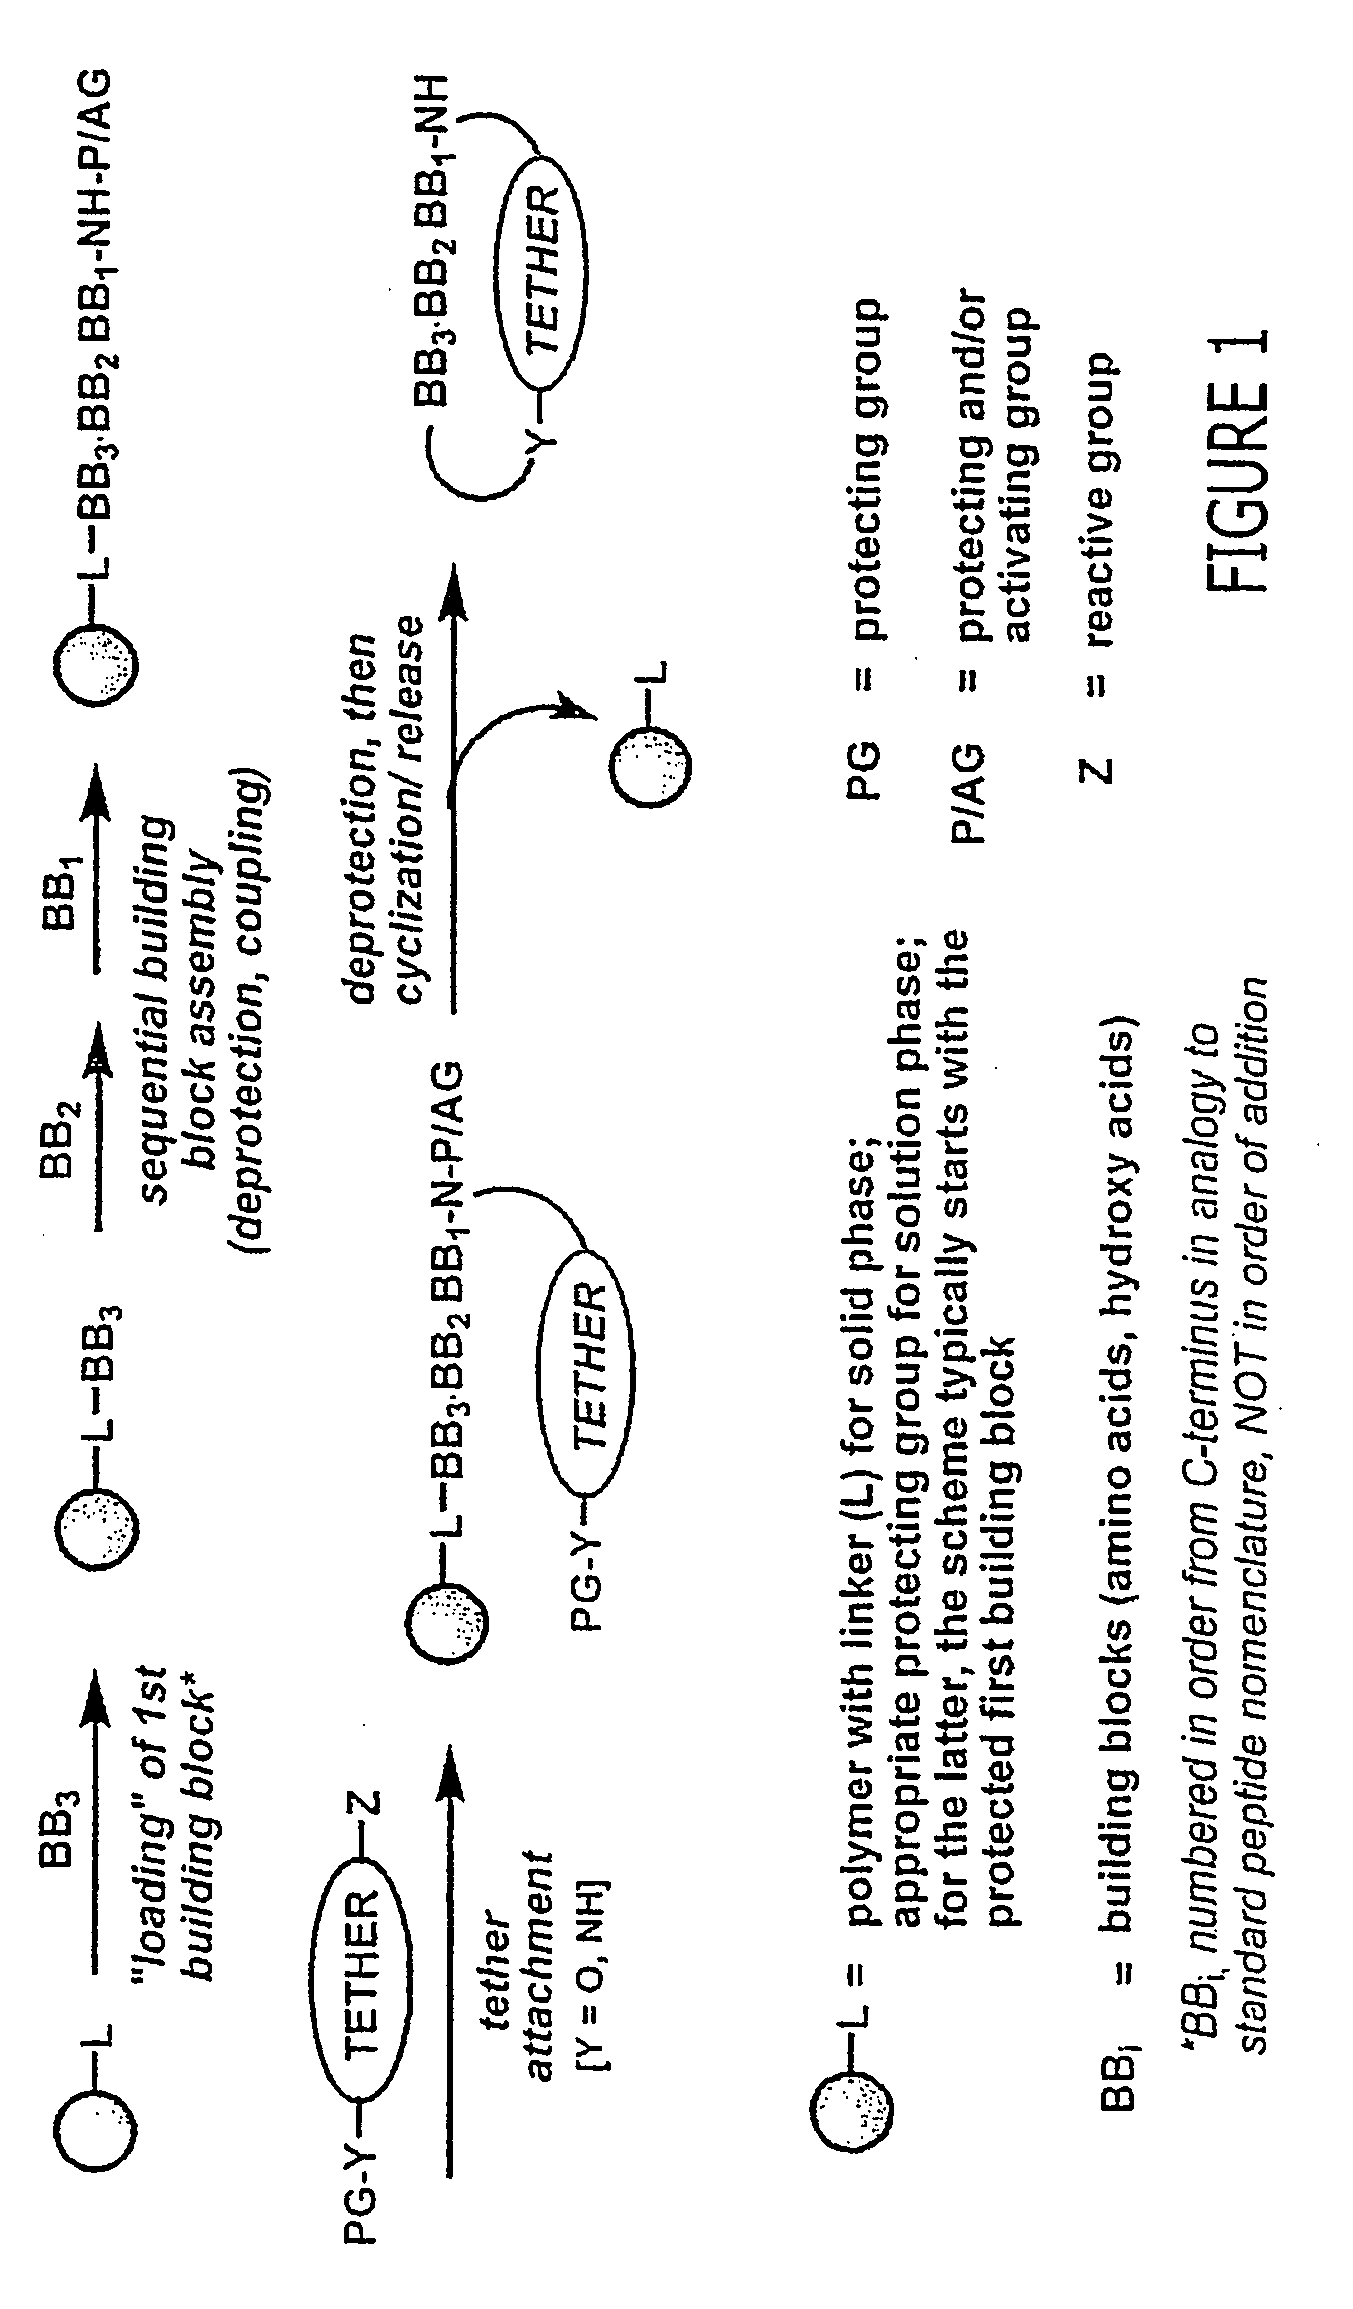 Methods of using macrocyclic modulators of the ghrelin receptor